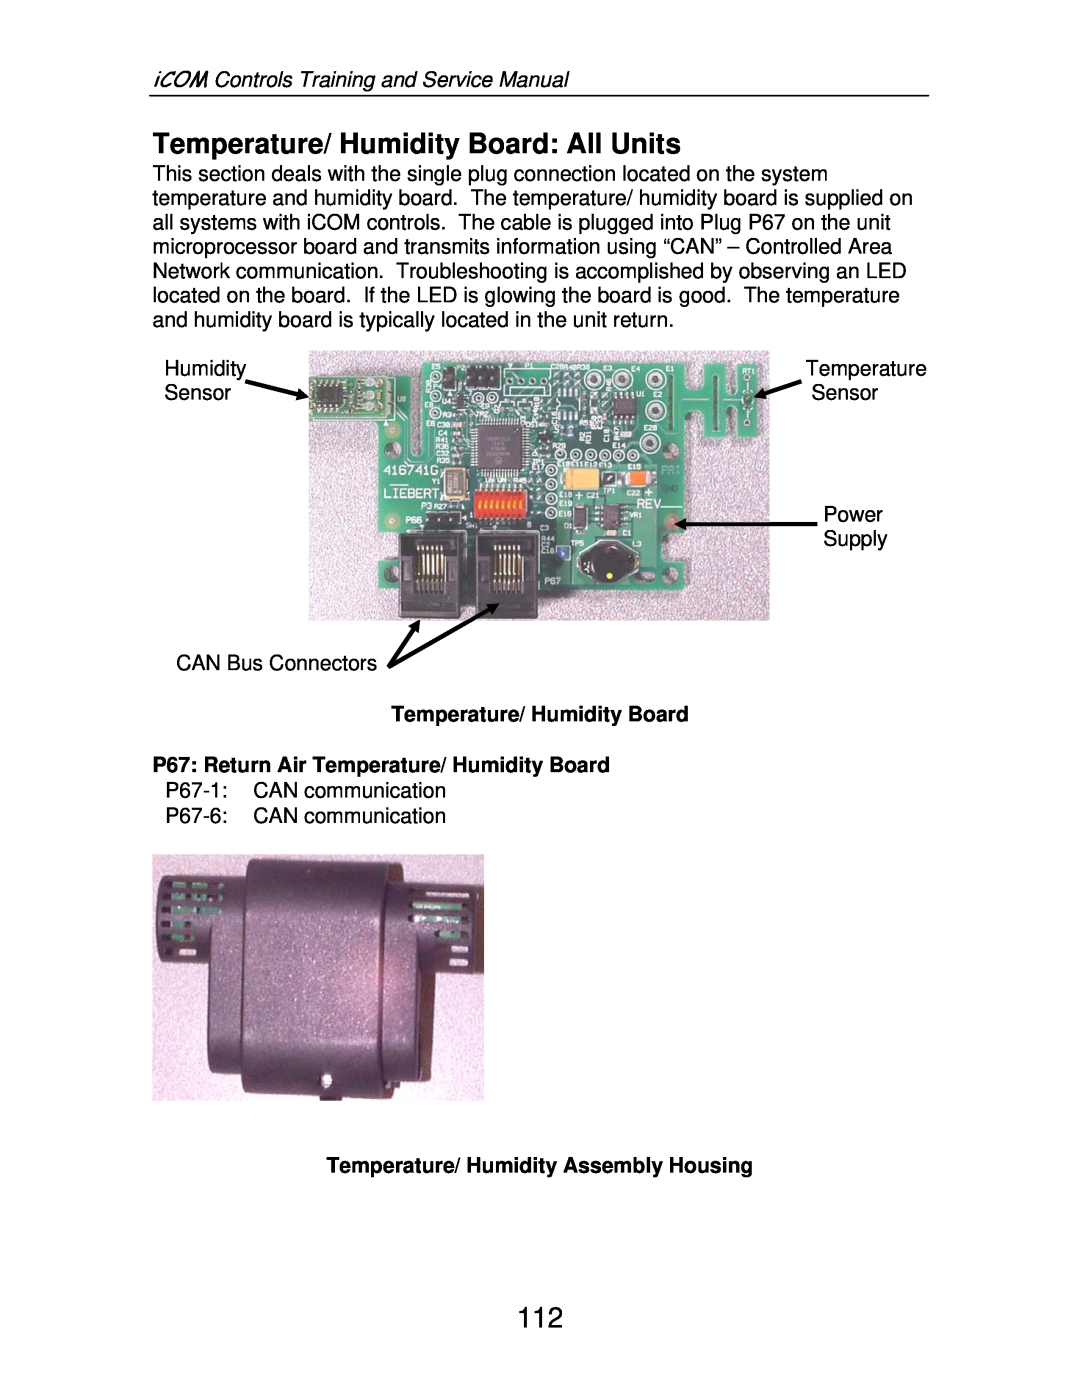 Liebert TM-10098 service manual Temperature/ Humidity Board: All Units, iCOM Controls Training and Service Manual 